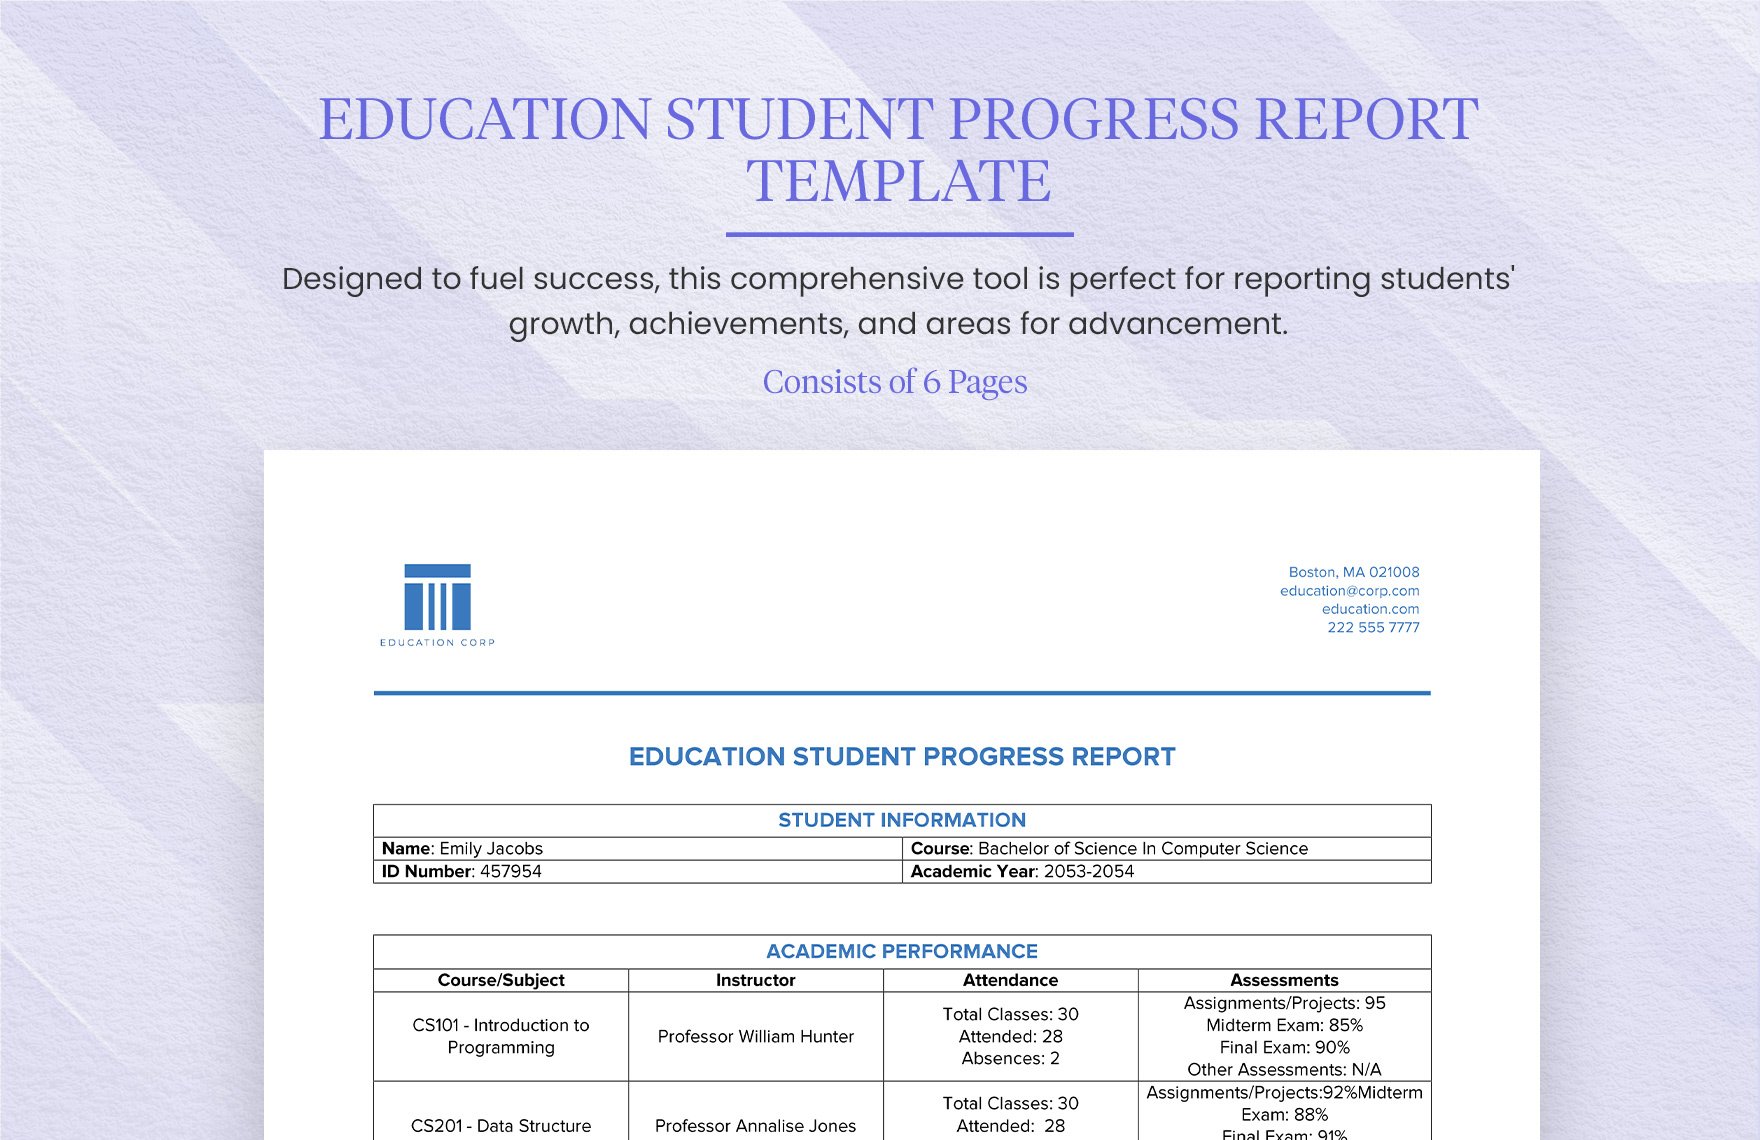 Education Student Progress Report Template